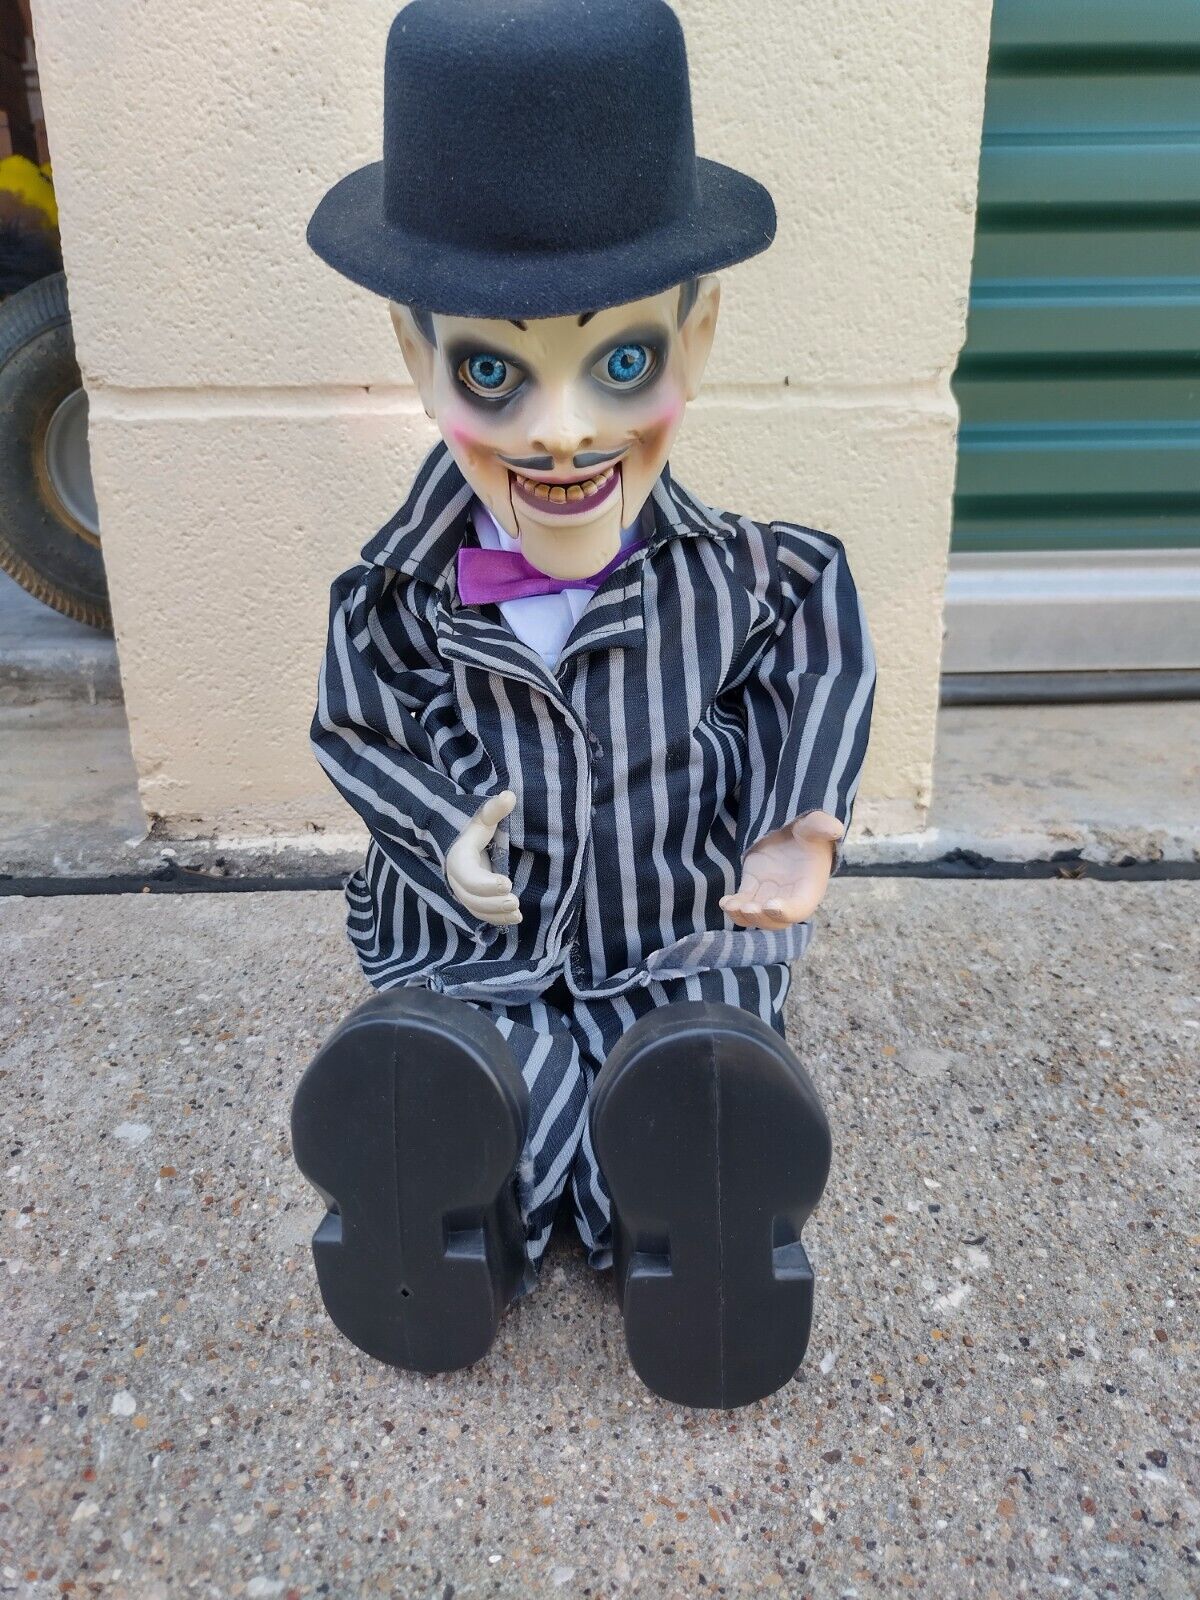 Animated Haunted Creepy Halloween Talking Ventriloquist Doll Decor